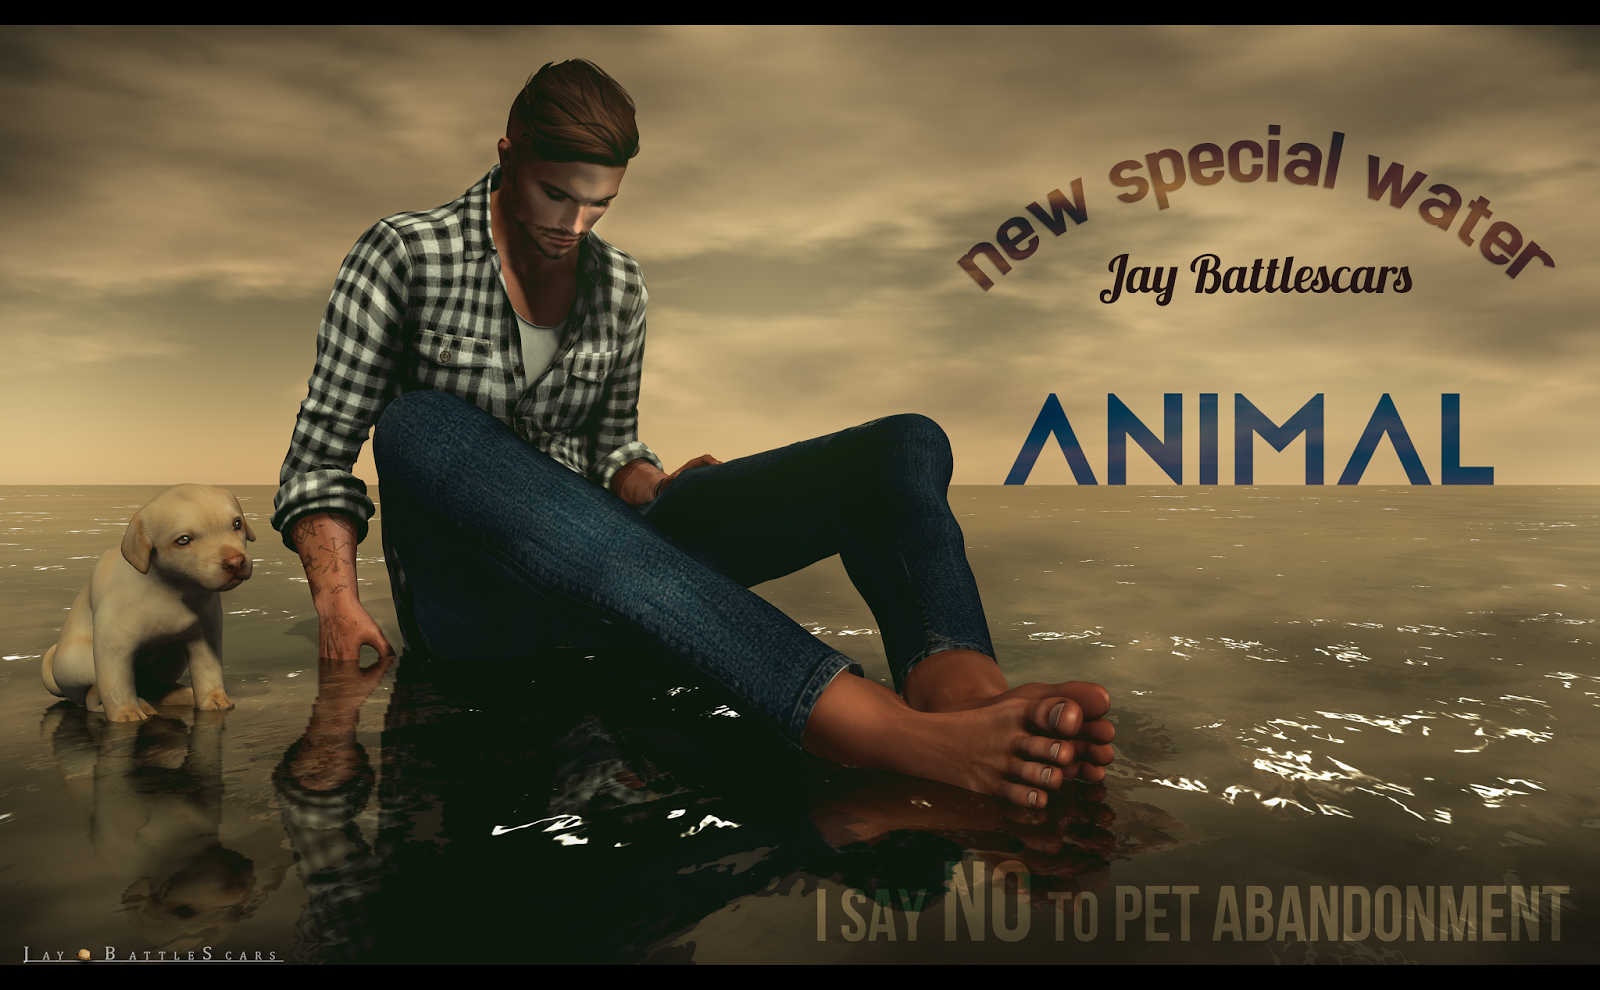 I say NO to pet abandonment